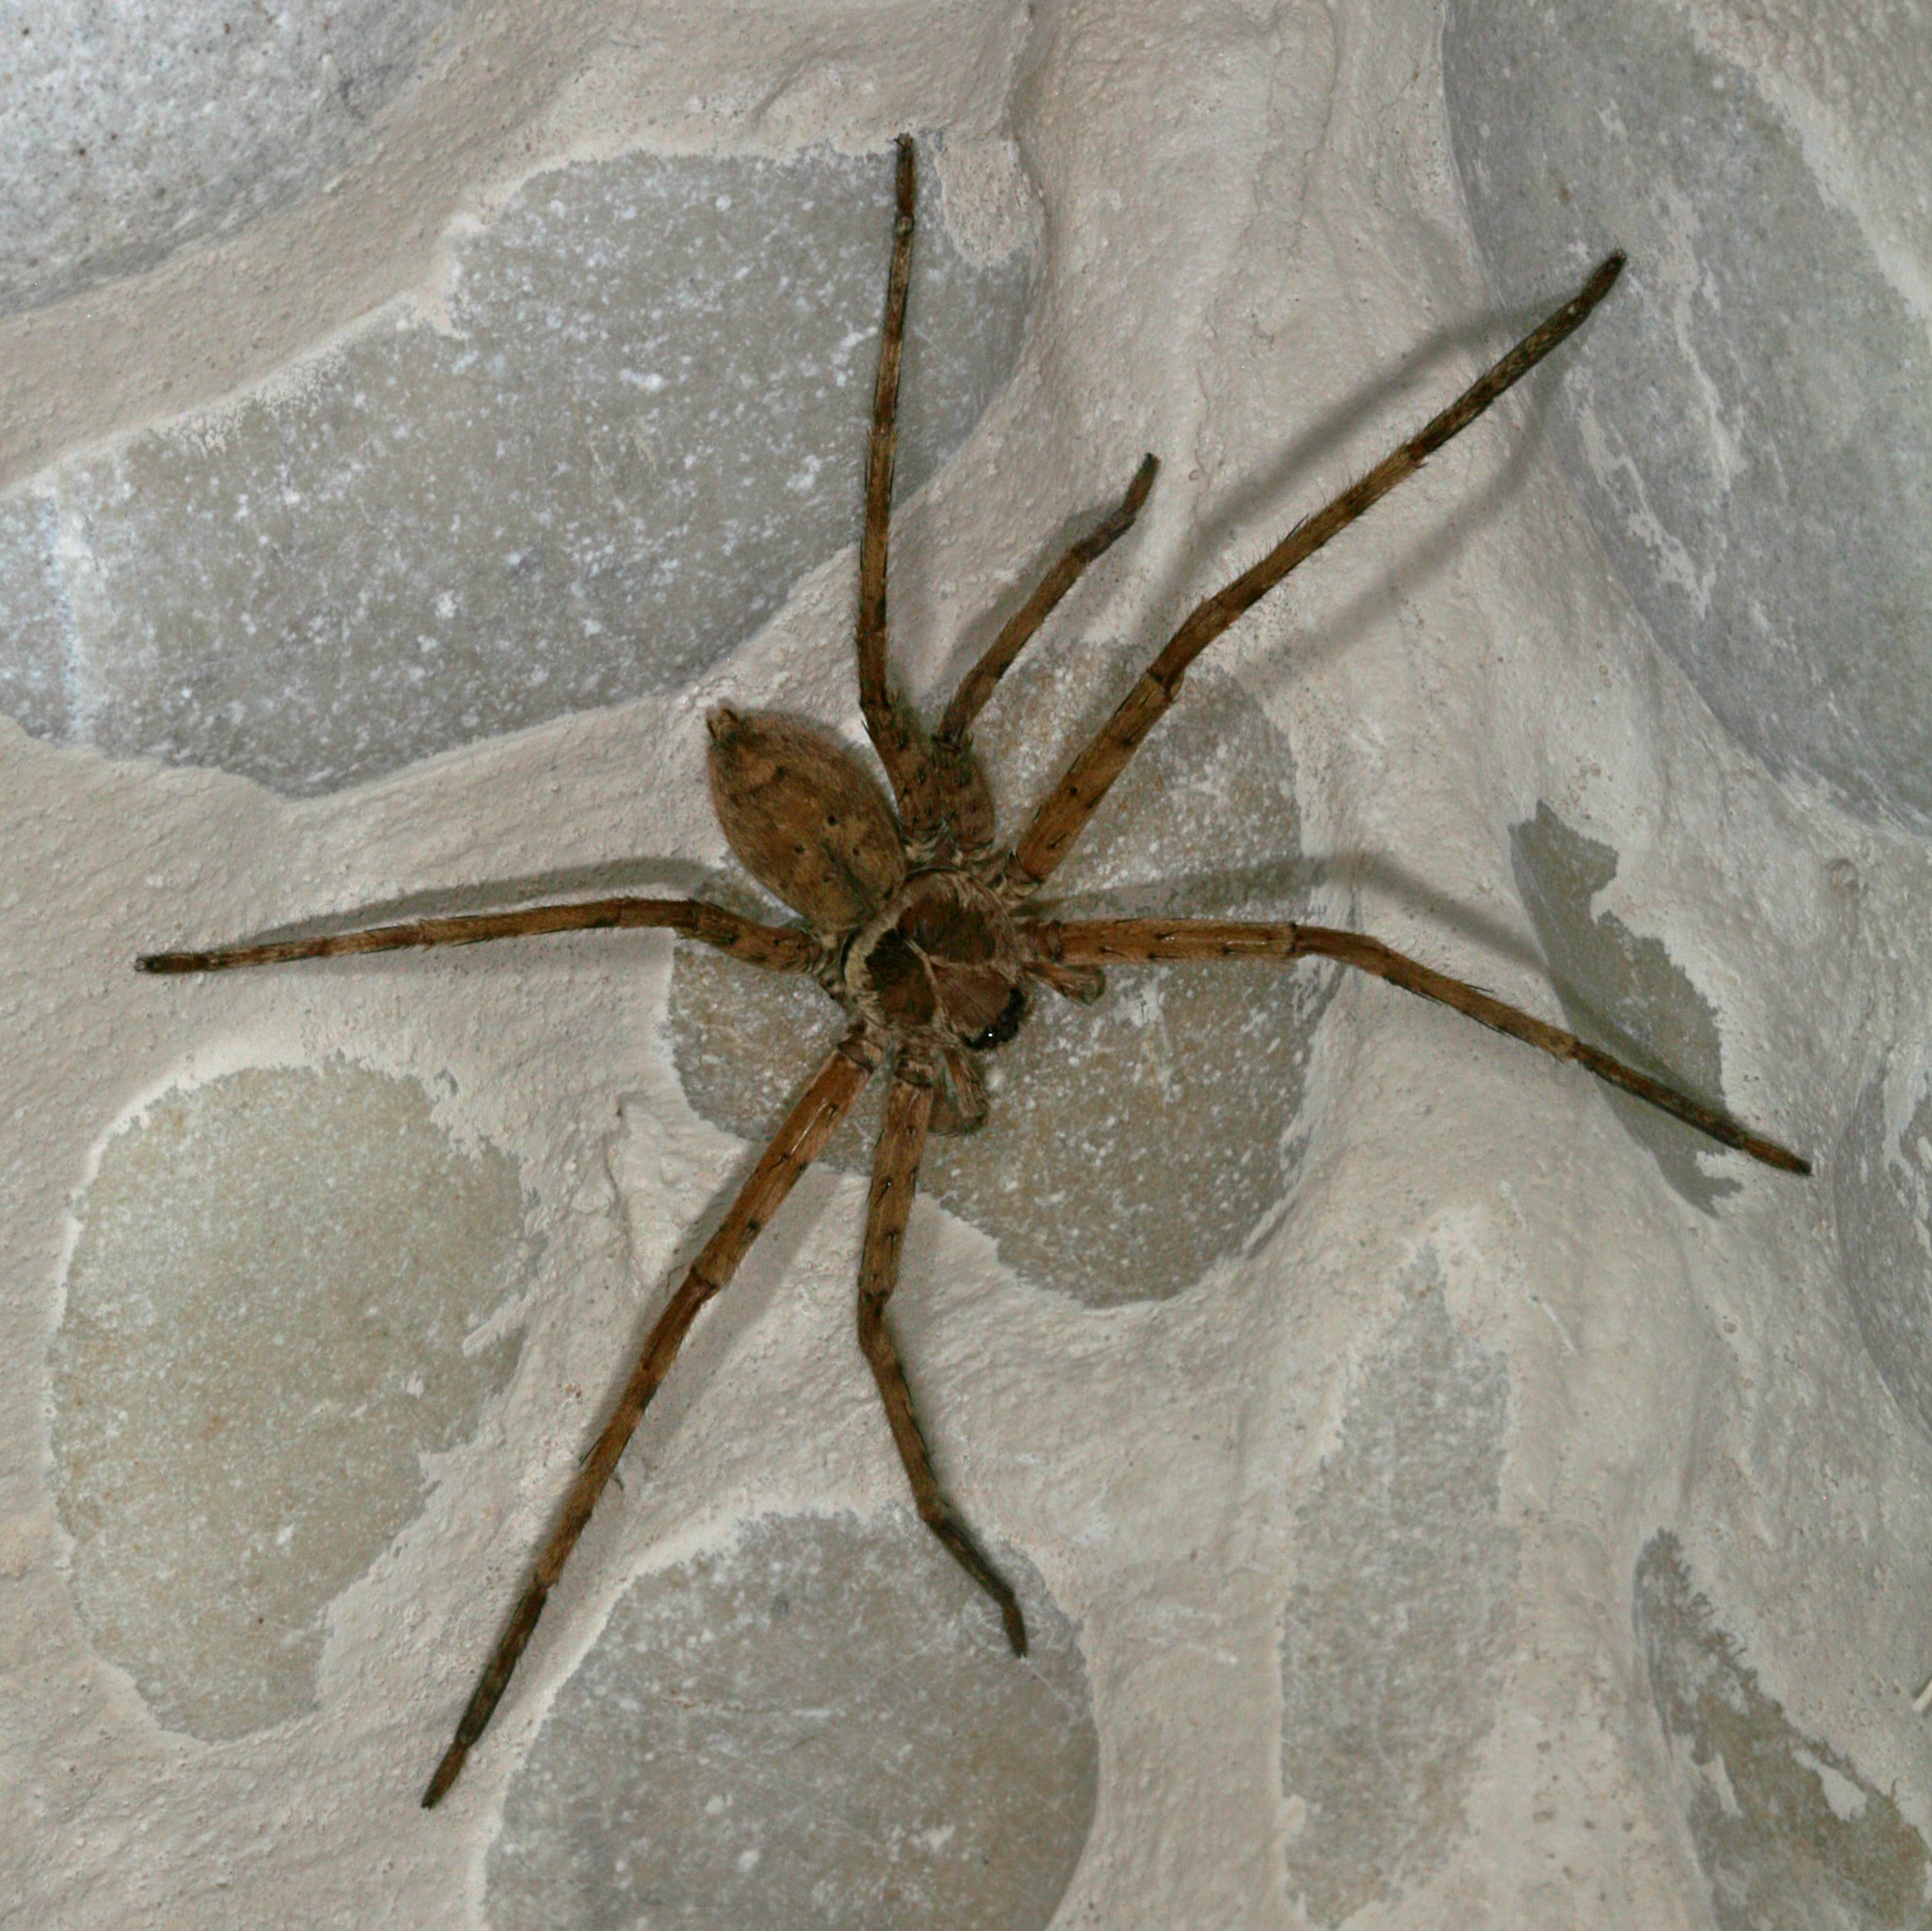 Heteropoda venatoria - The Brown Huntsman Spider aka Giant Crab ...